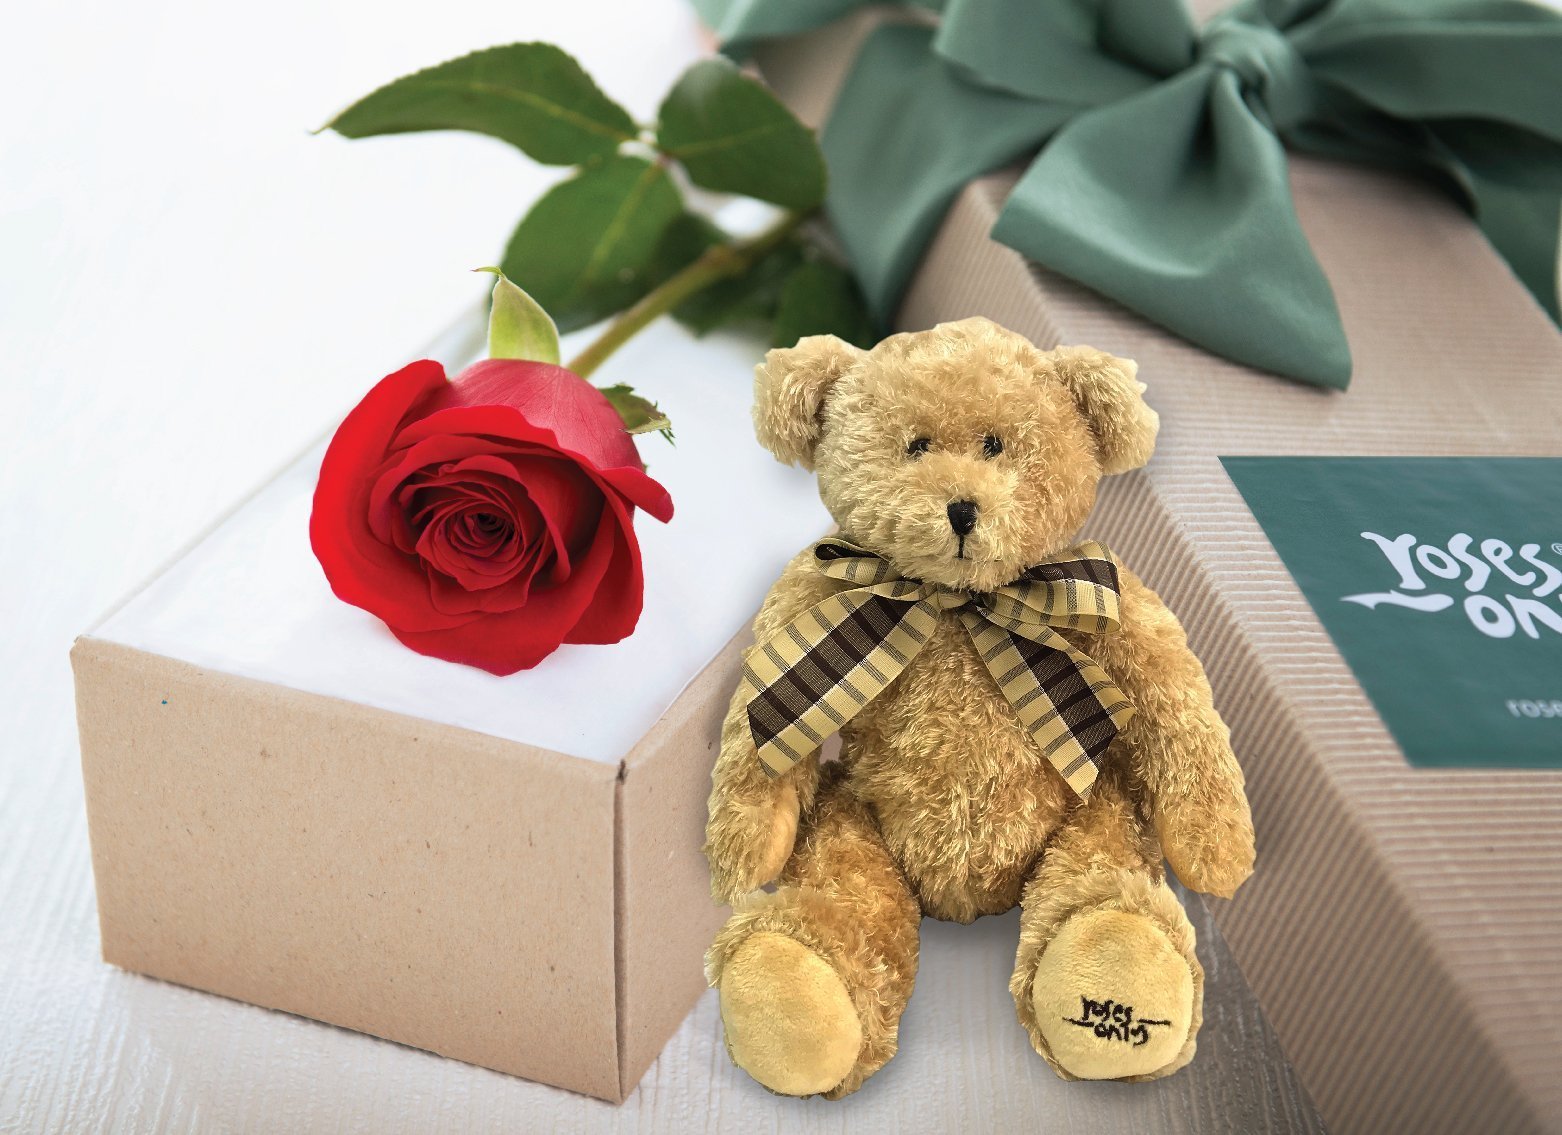 teddy bear red rose